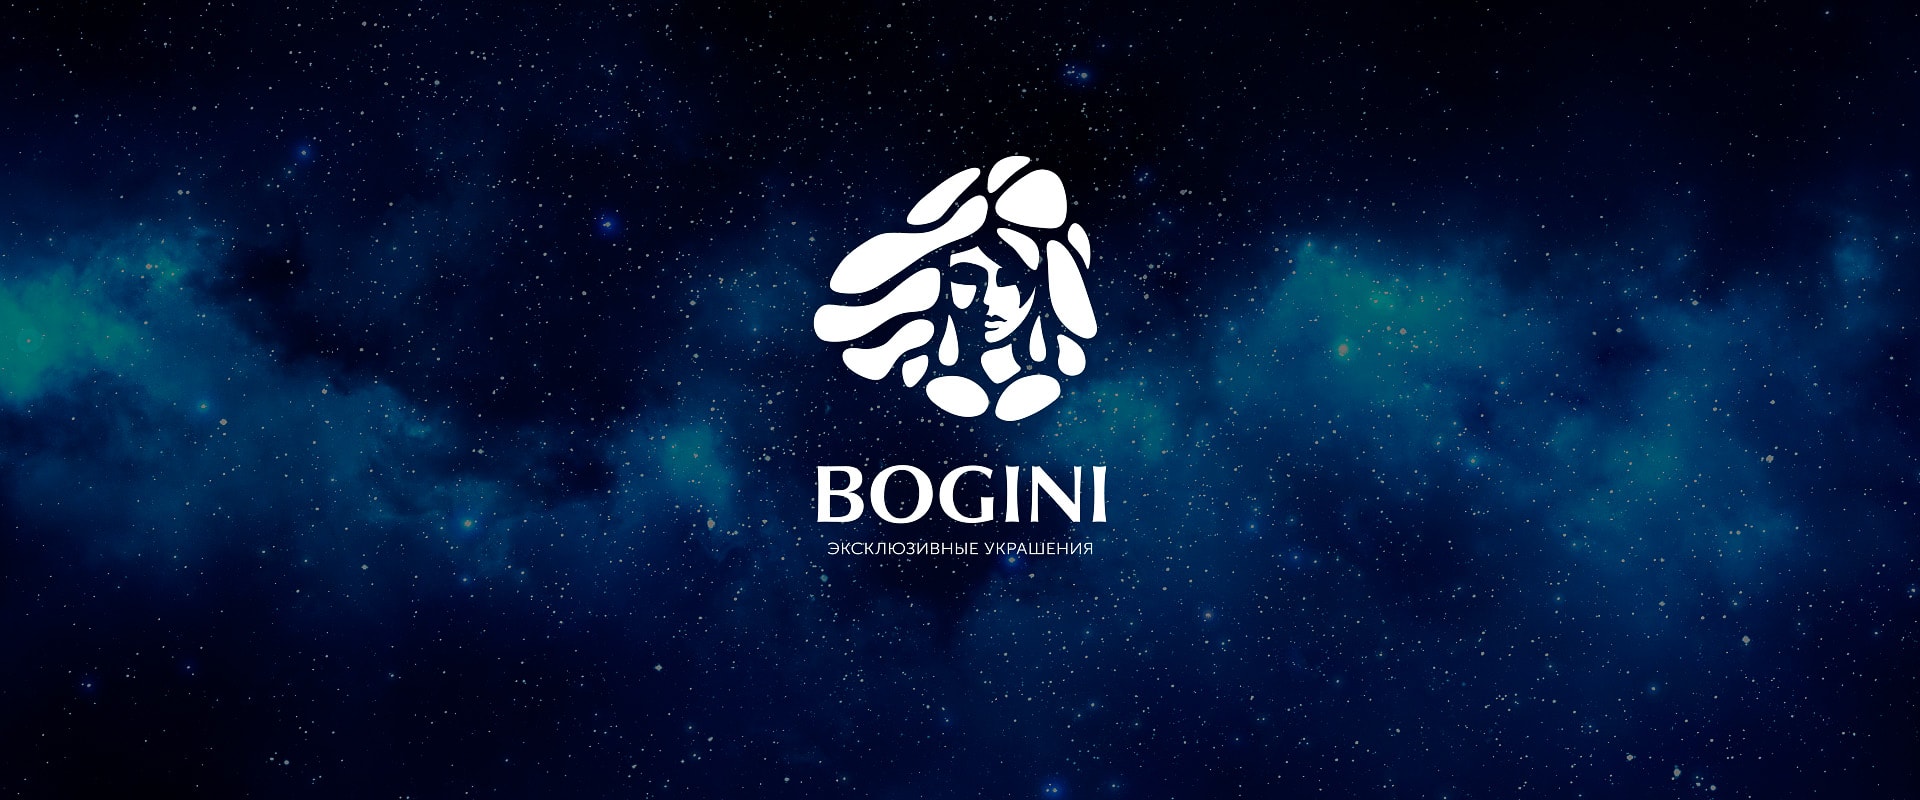 Bogigni_01